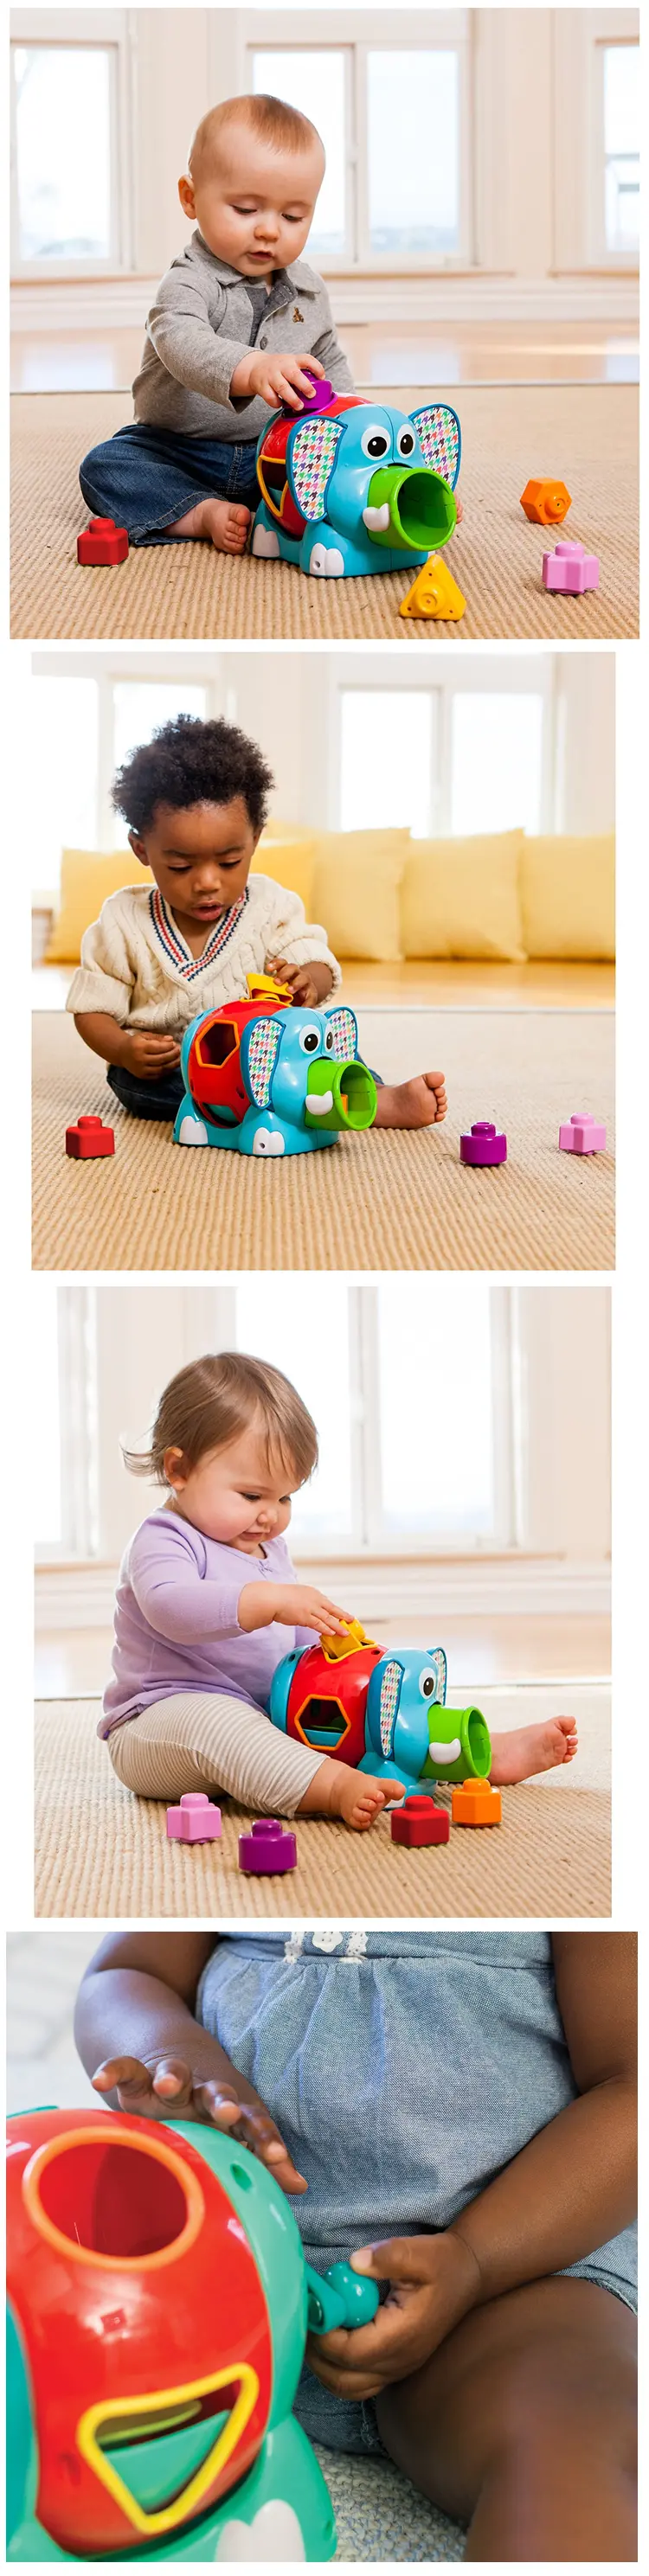 infantino 形状分类玩具-大象